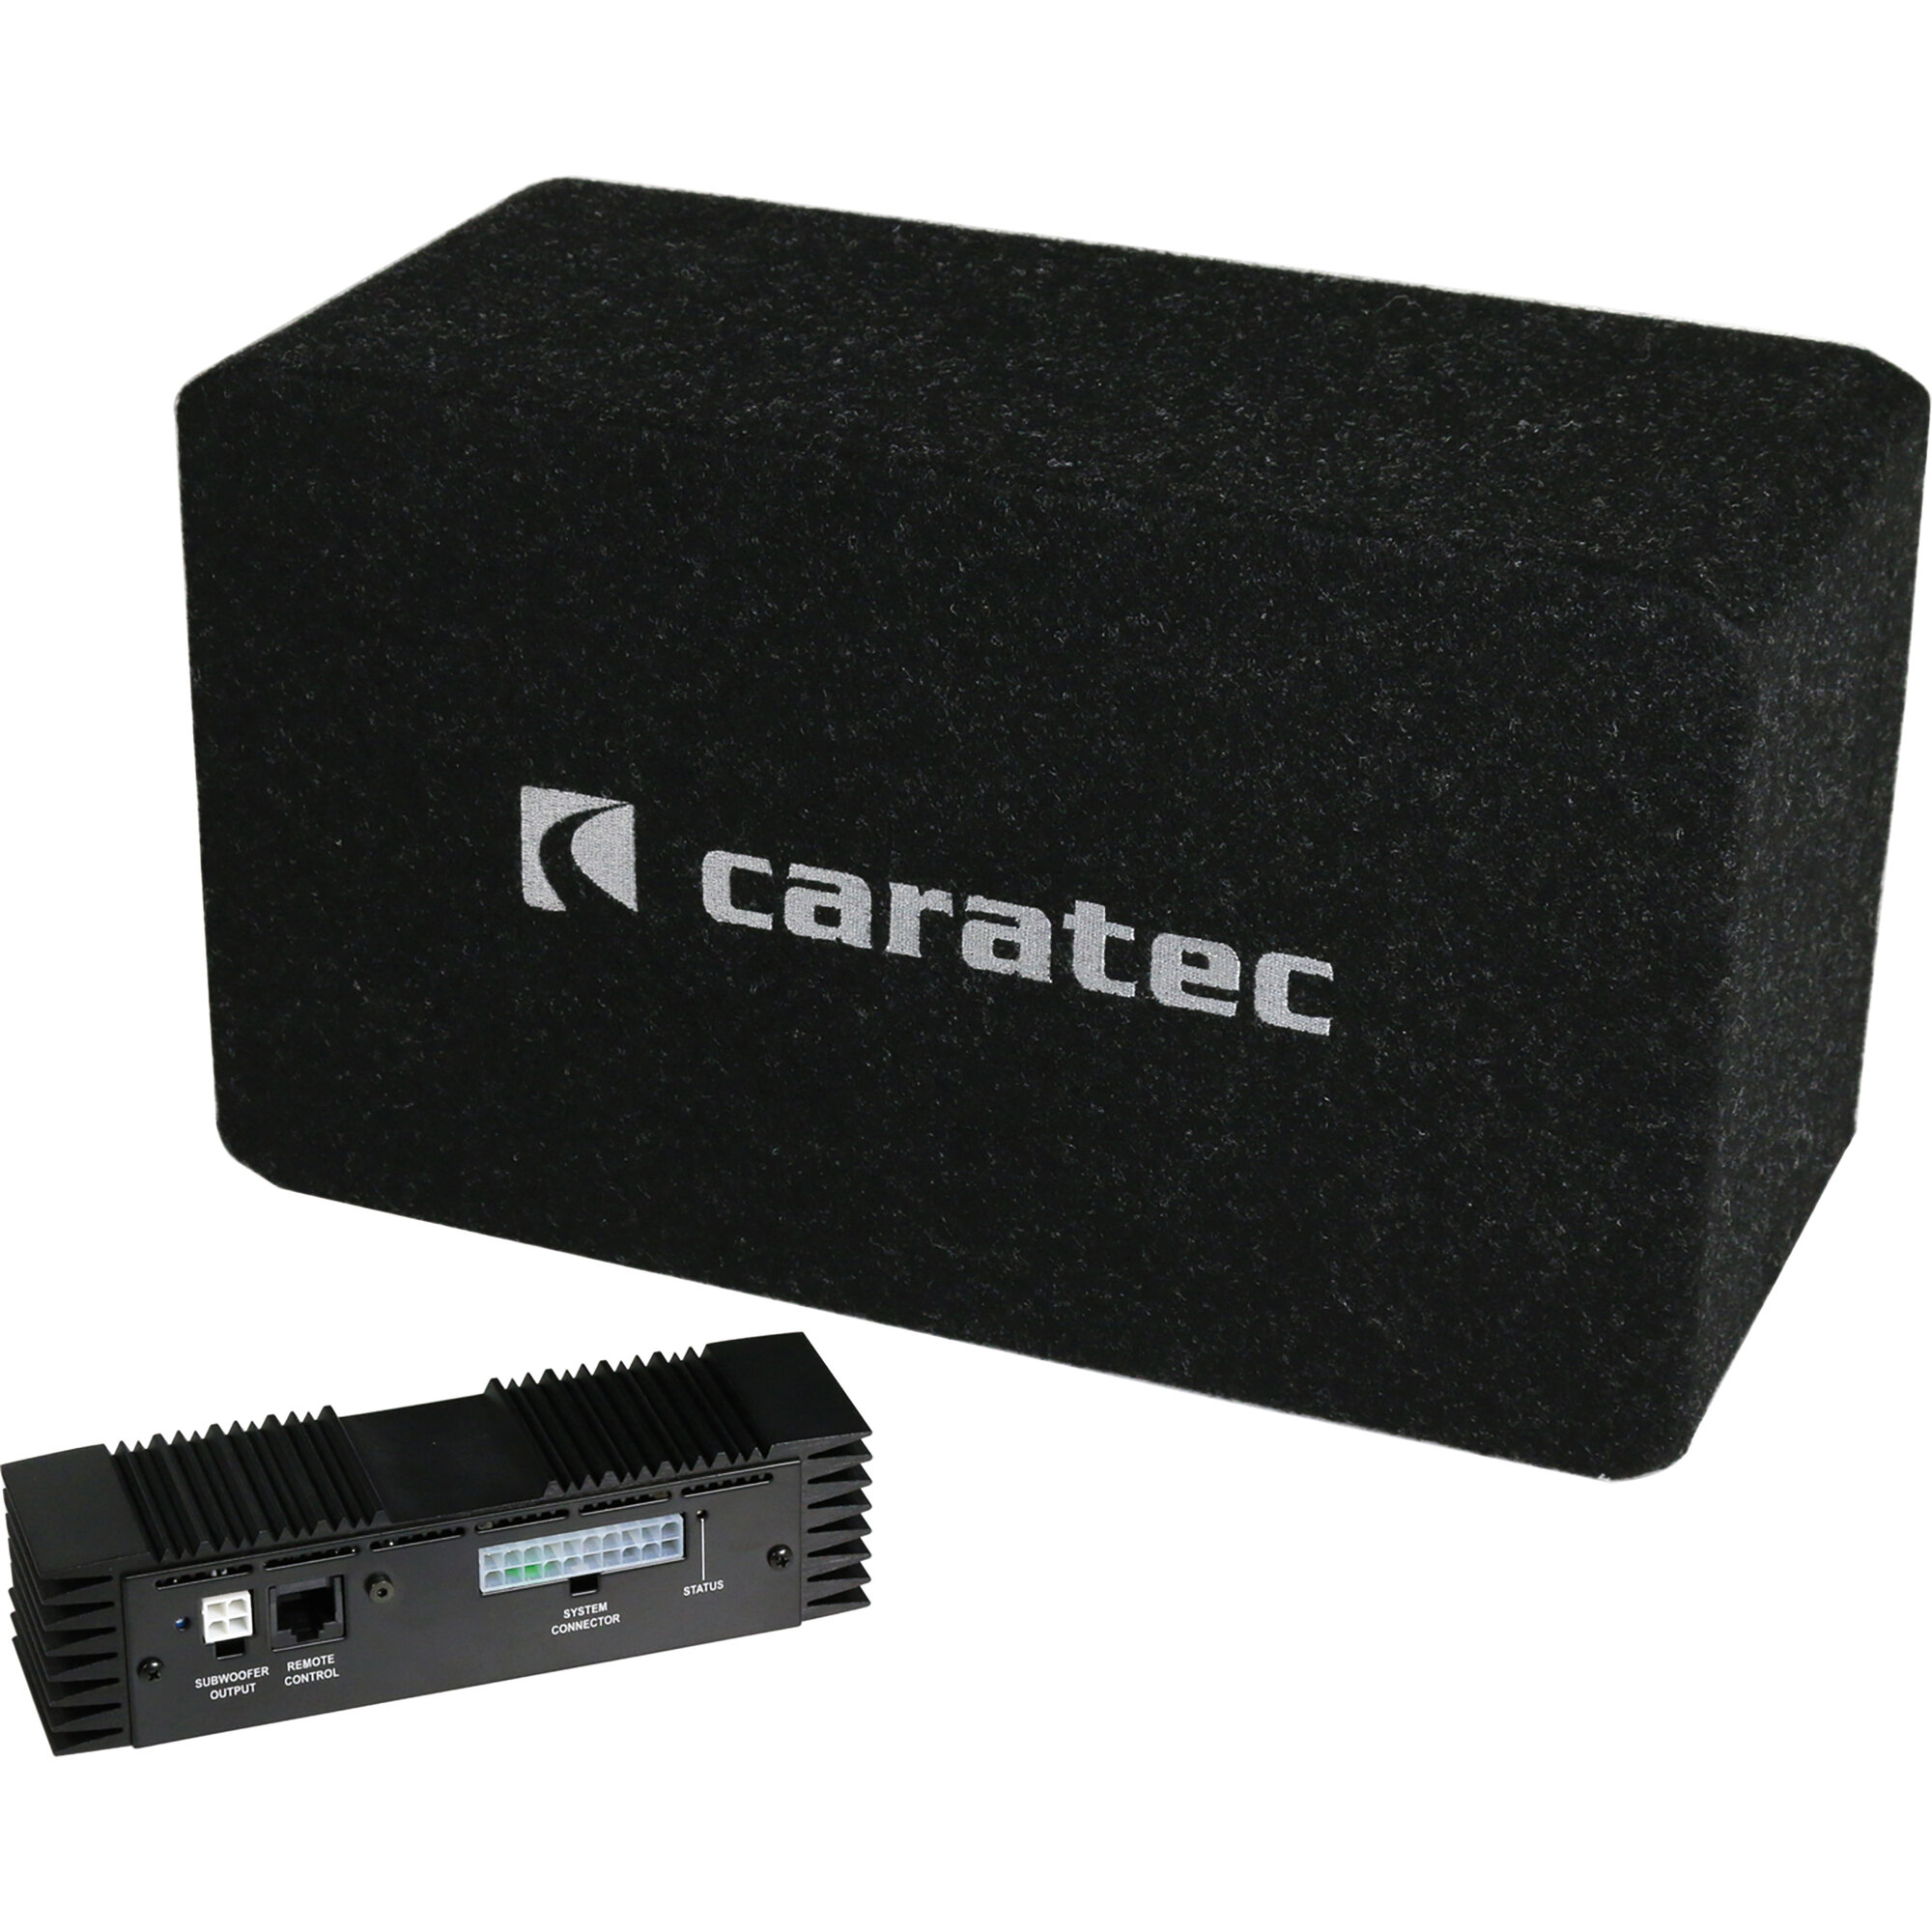 Caratec Audio Soundsystem